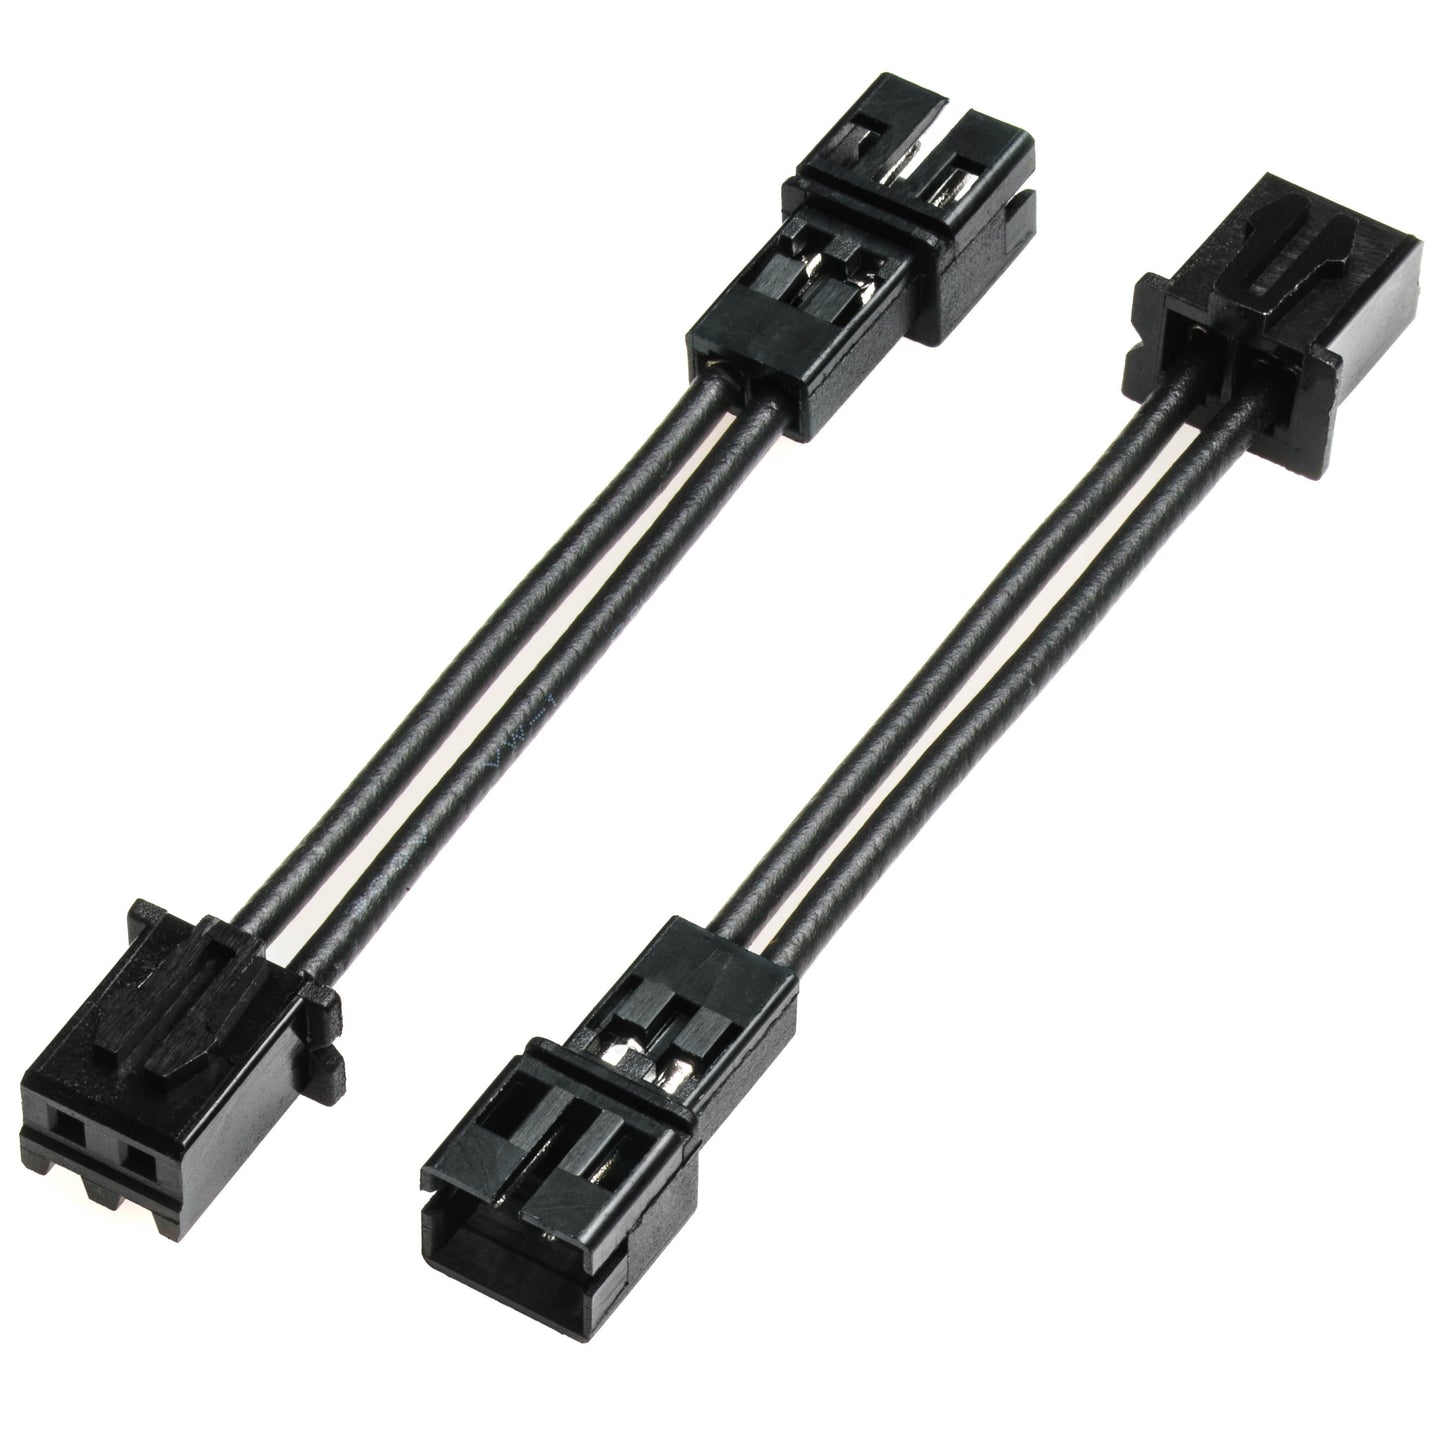 2-Pin Adapter - Mini XH 2.5mm to Micro PH 2.0mm (2-Pack)